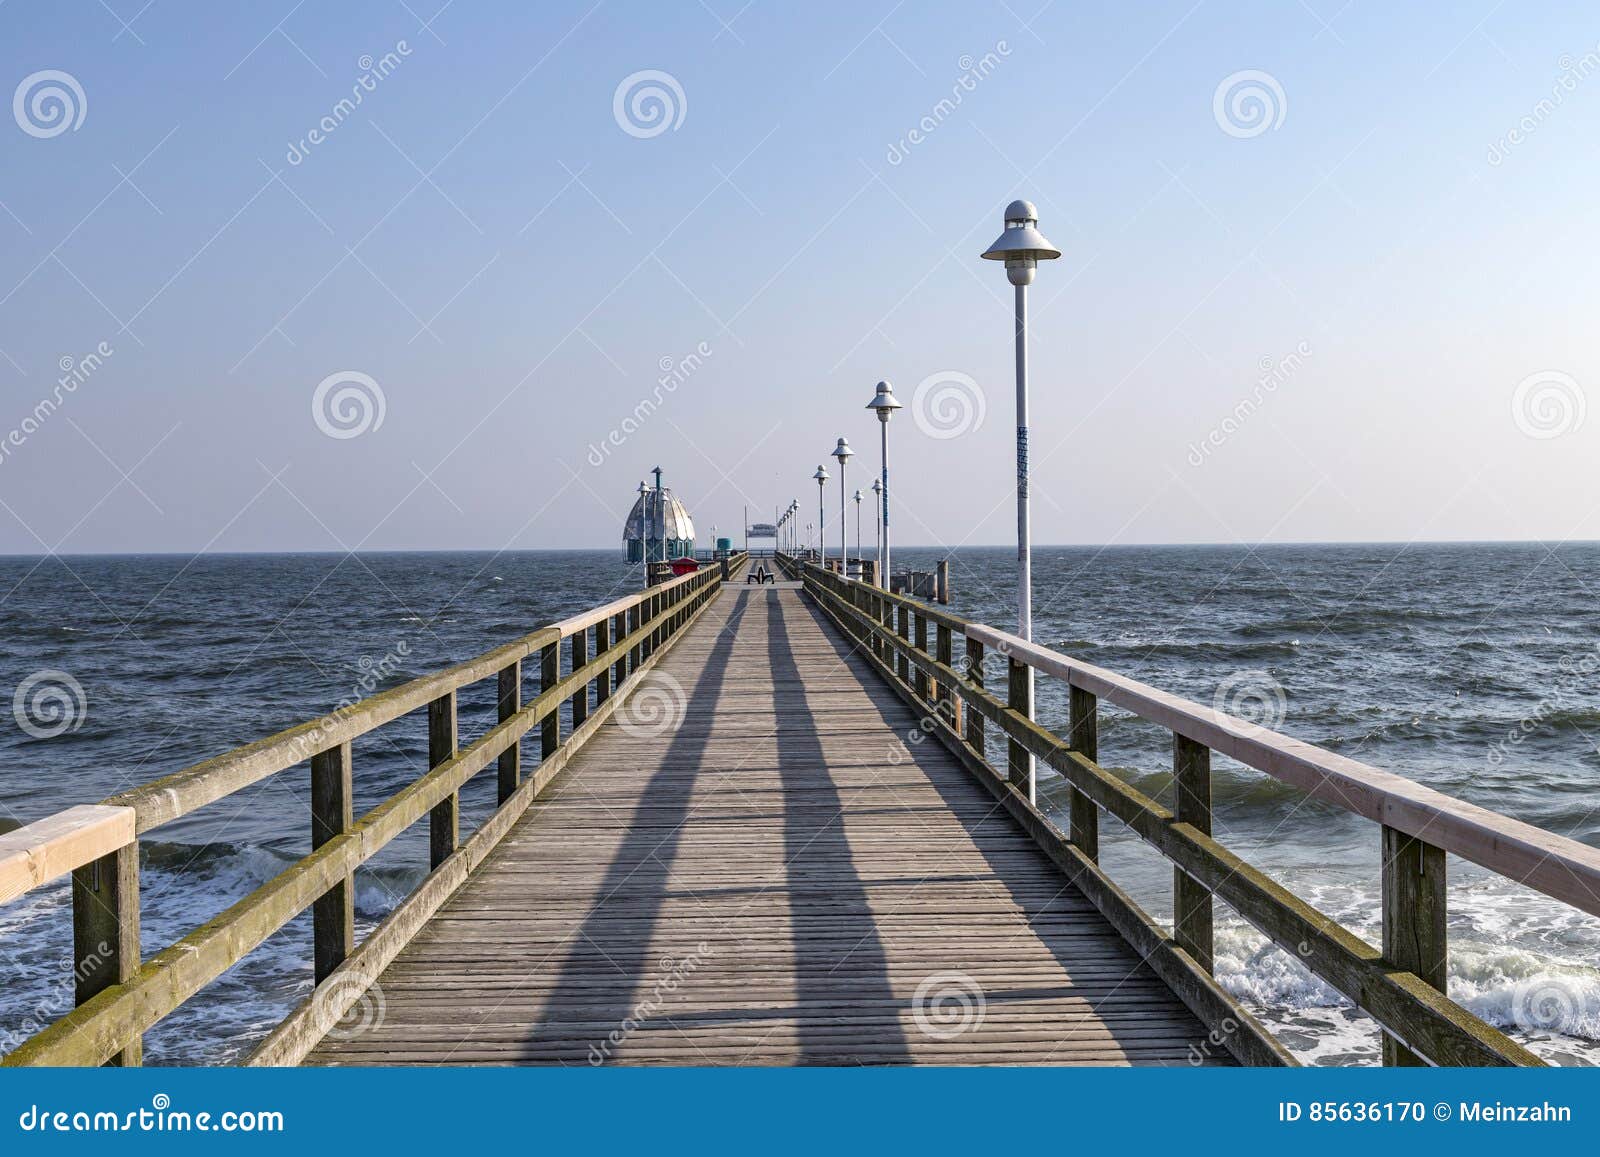 pier, vineta bridge and submarine at zinnowitz